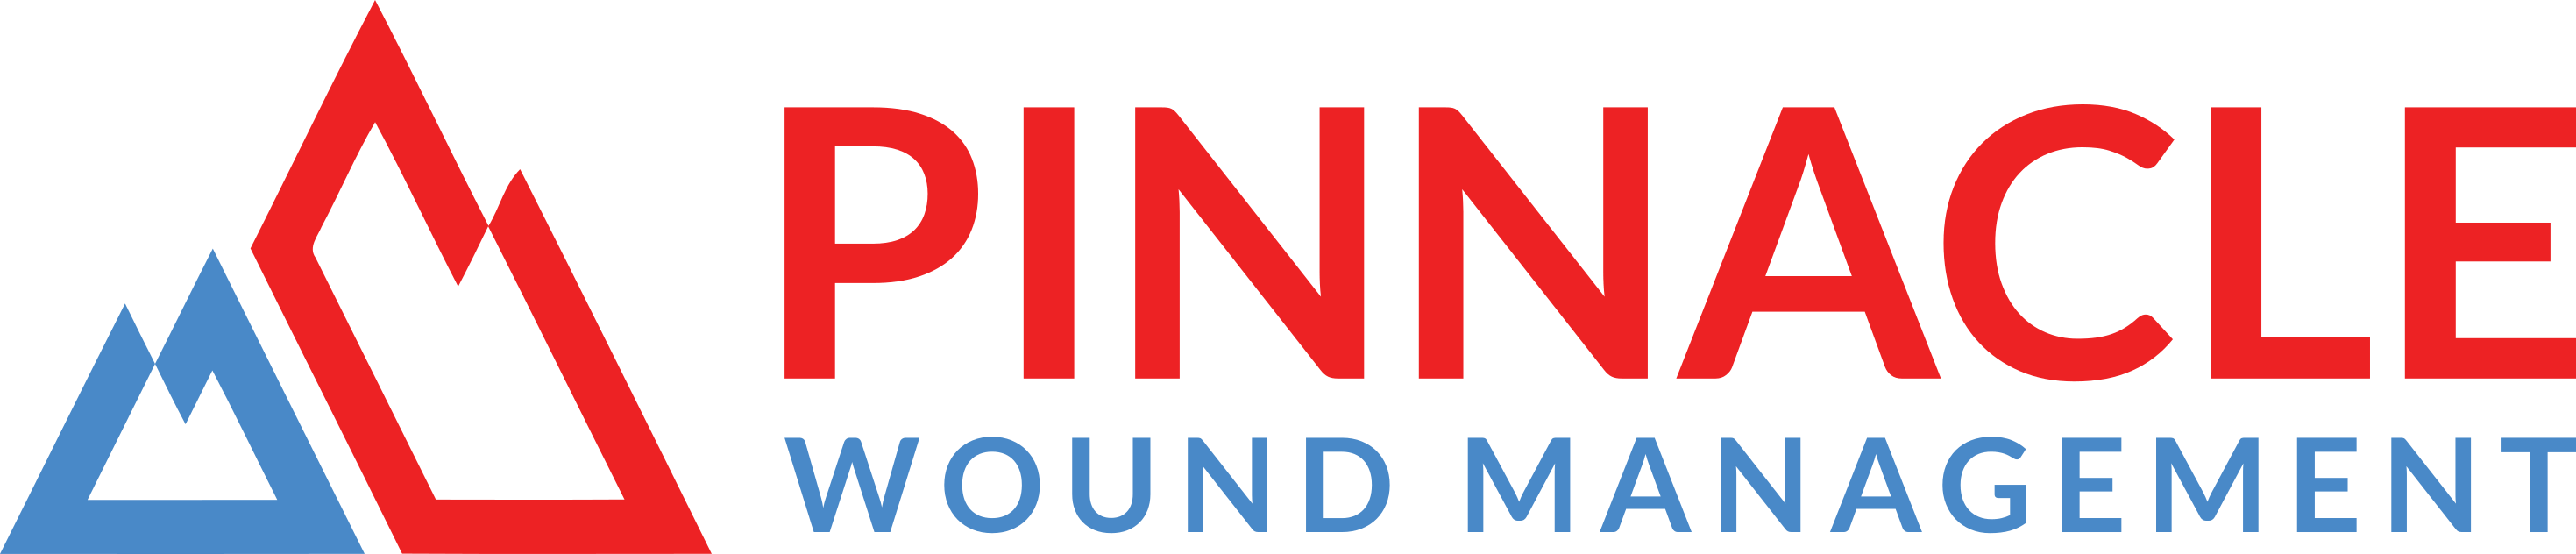 Pinnacle Wound Management Logo